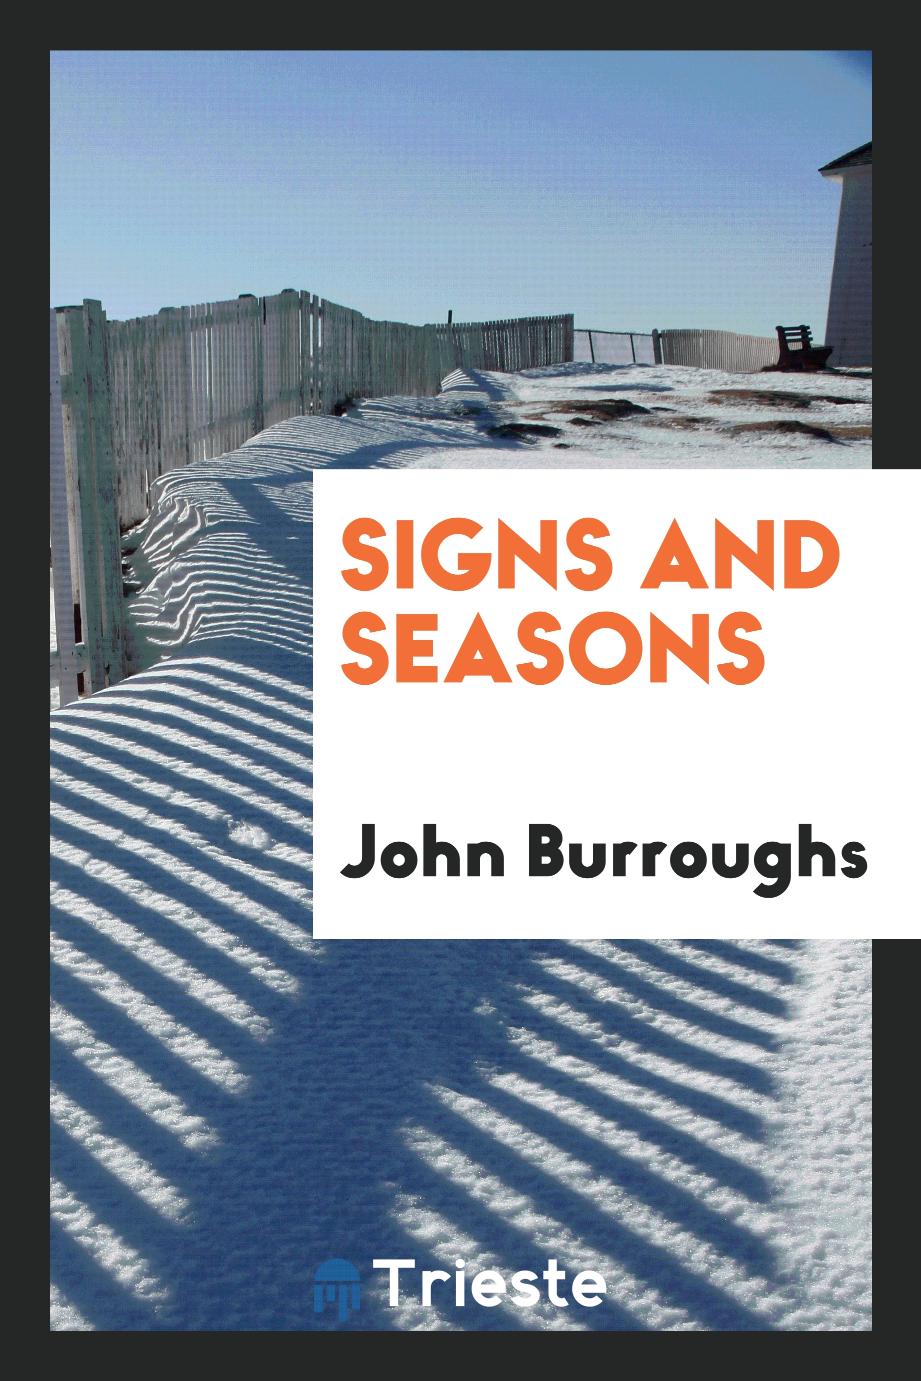 Signs and seasons